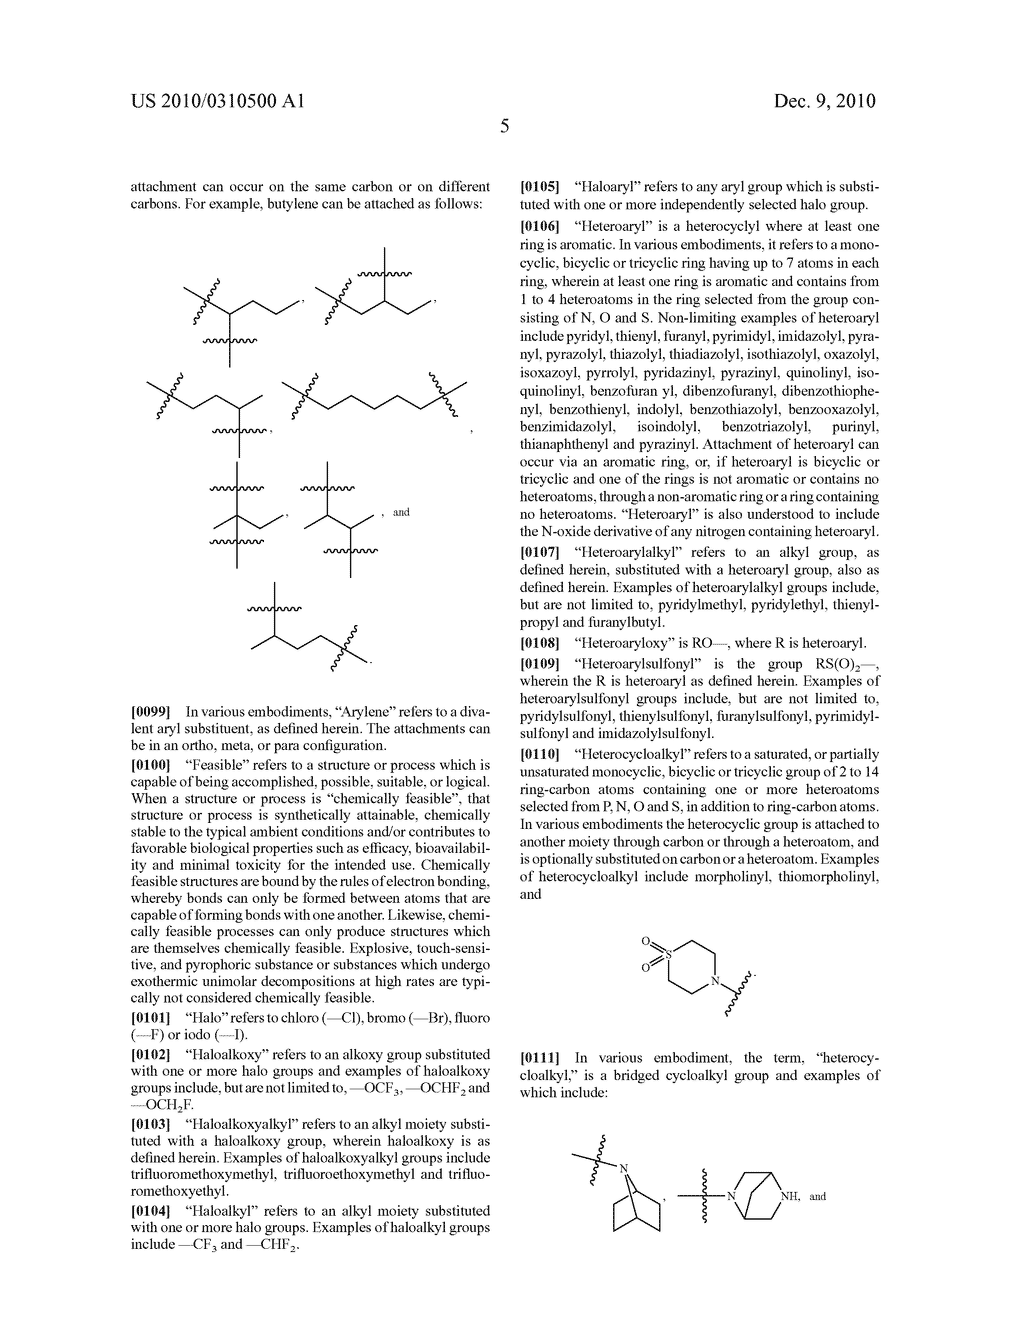 ALKANOYLAMINO BENZAMIDE ANILINE HDAC INHIBITOR COMPOUNDS - diagram, schematic, and image 06